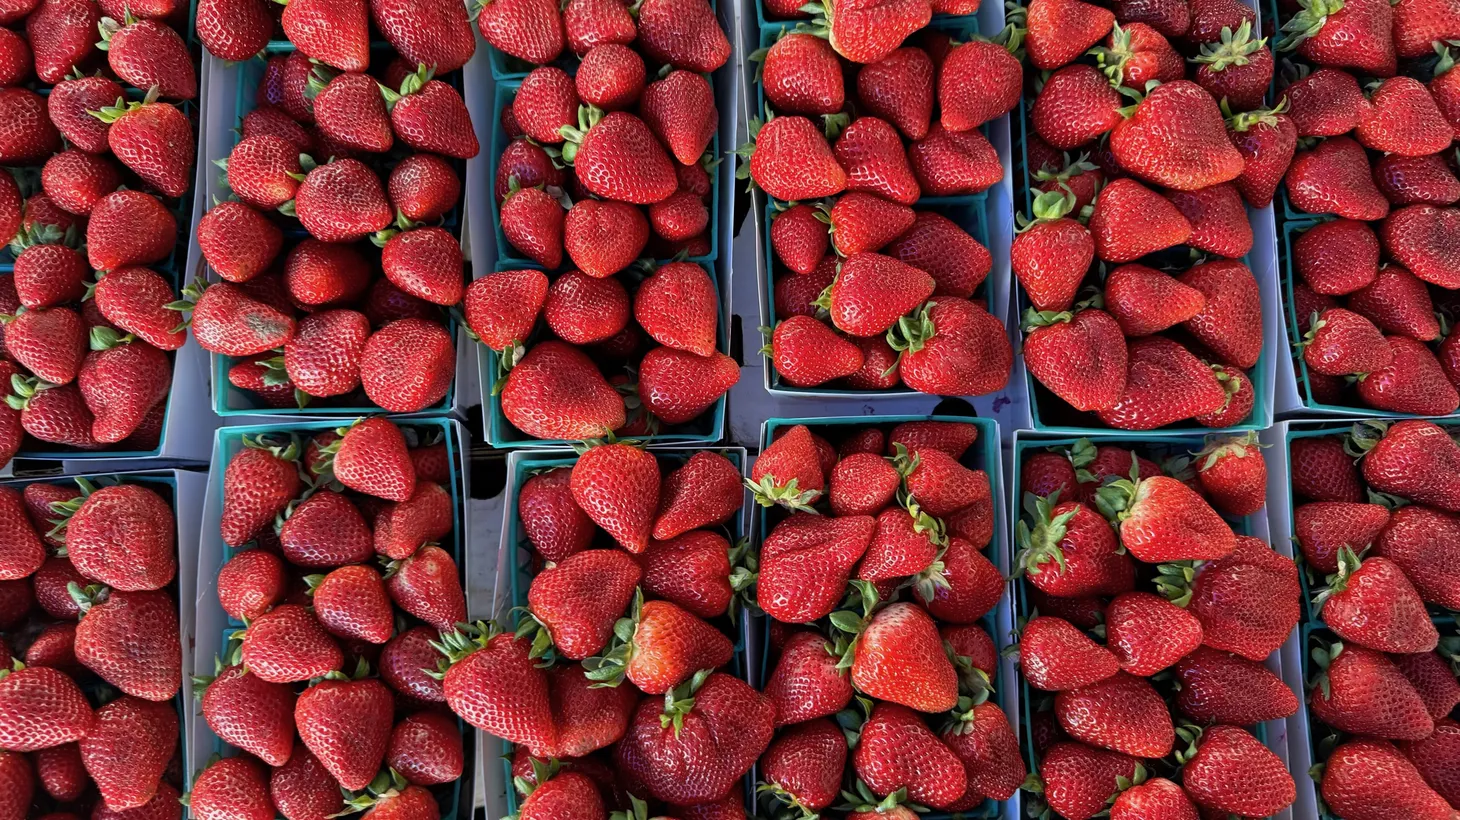 Gaviota strawberries from Tamai Family Farms are available at the farmers market.